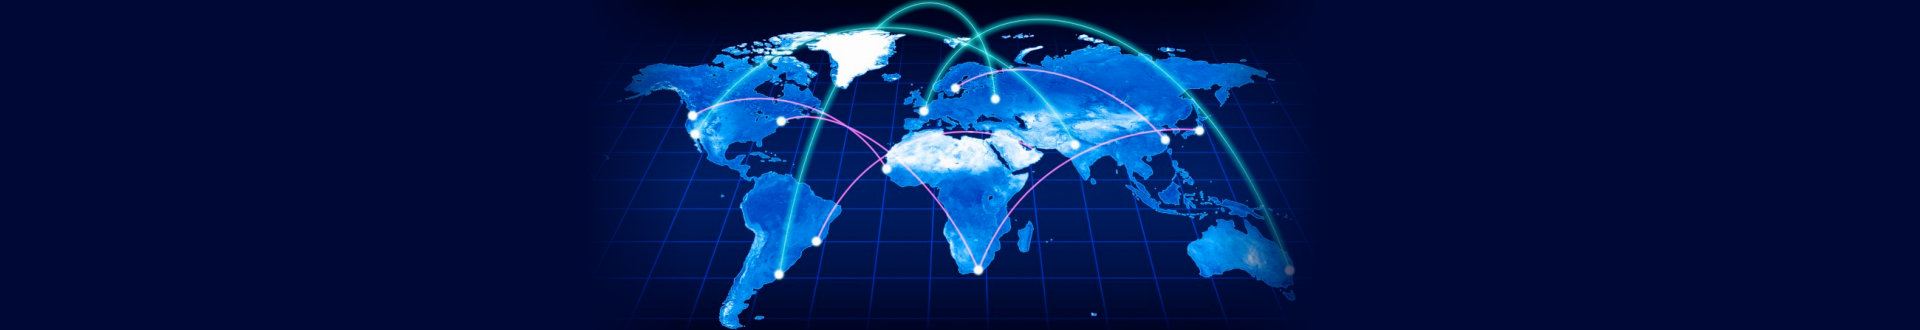 global network communication